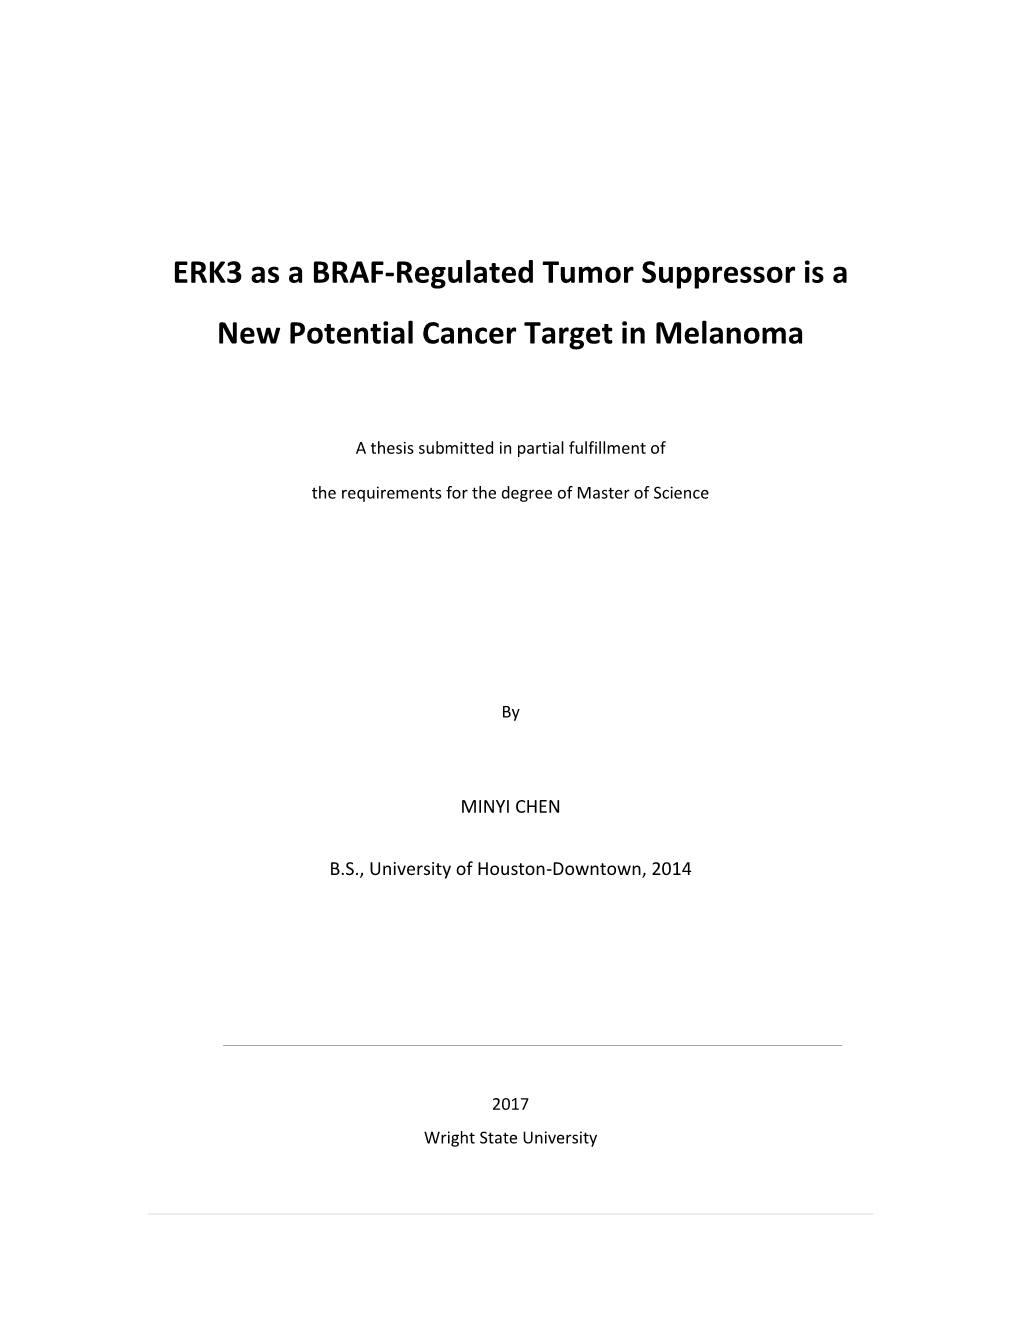 ERK3 As a BRAF-Regulated Tumor Suppressor Is a New Potential Cancer Target in Melanoma